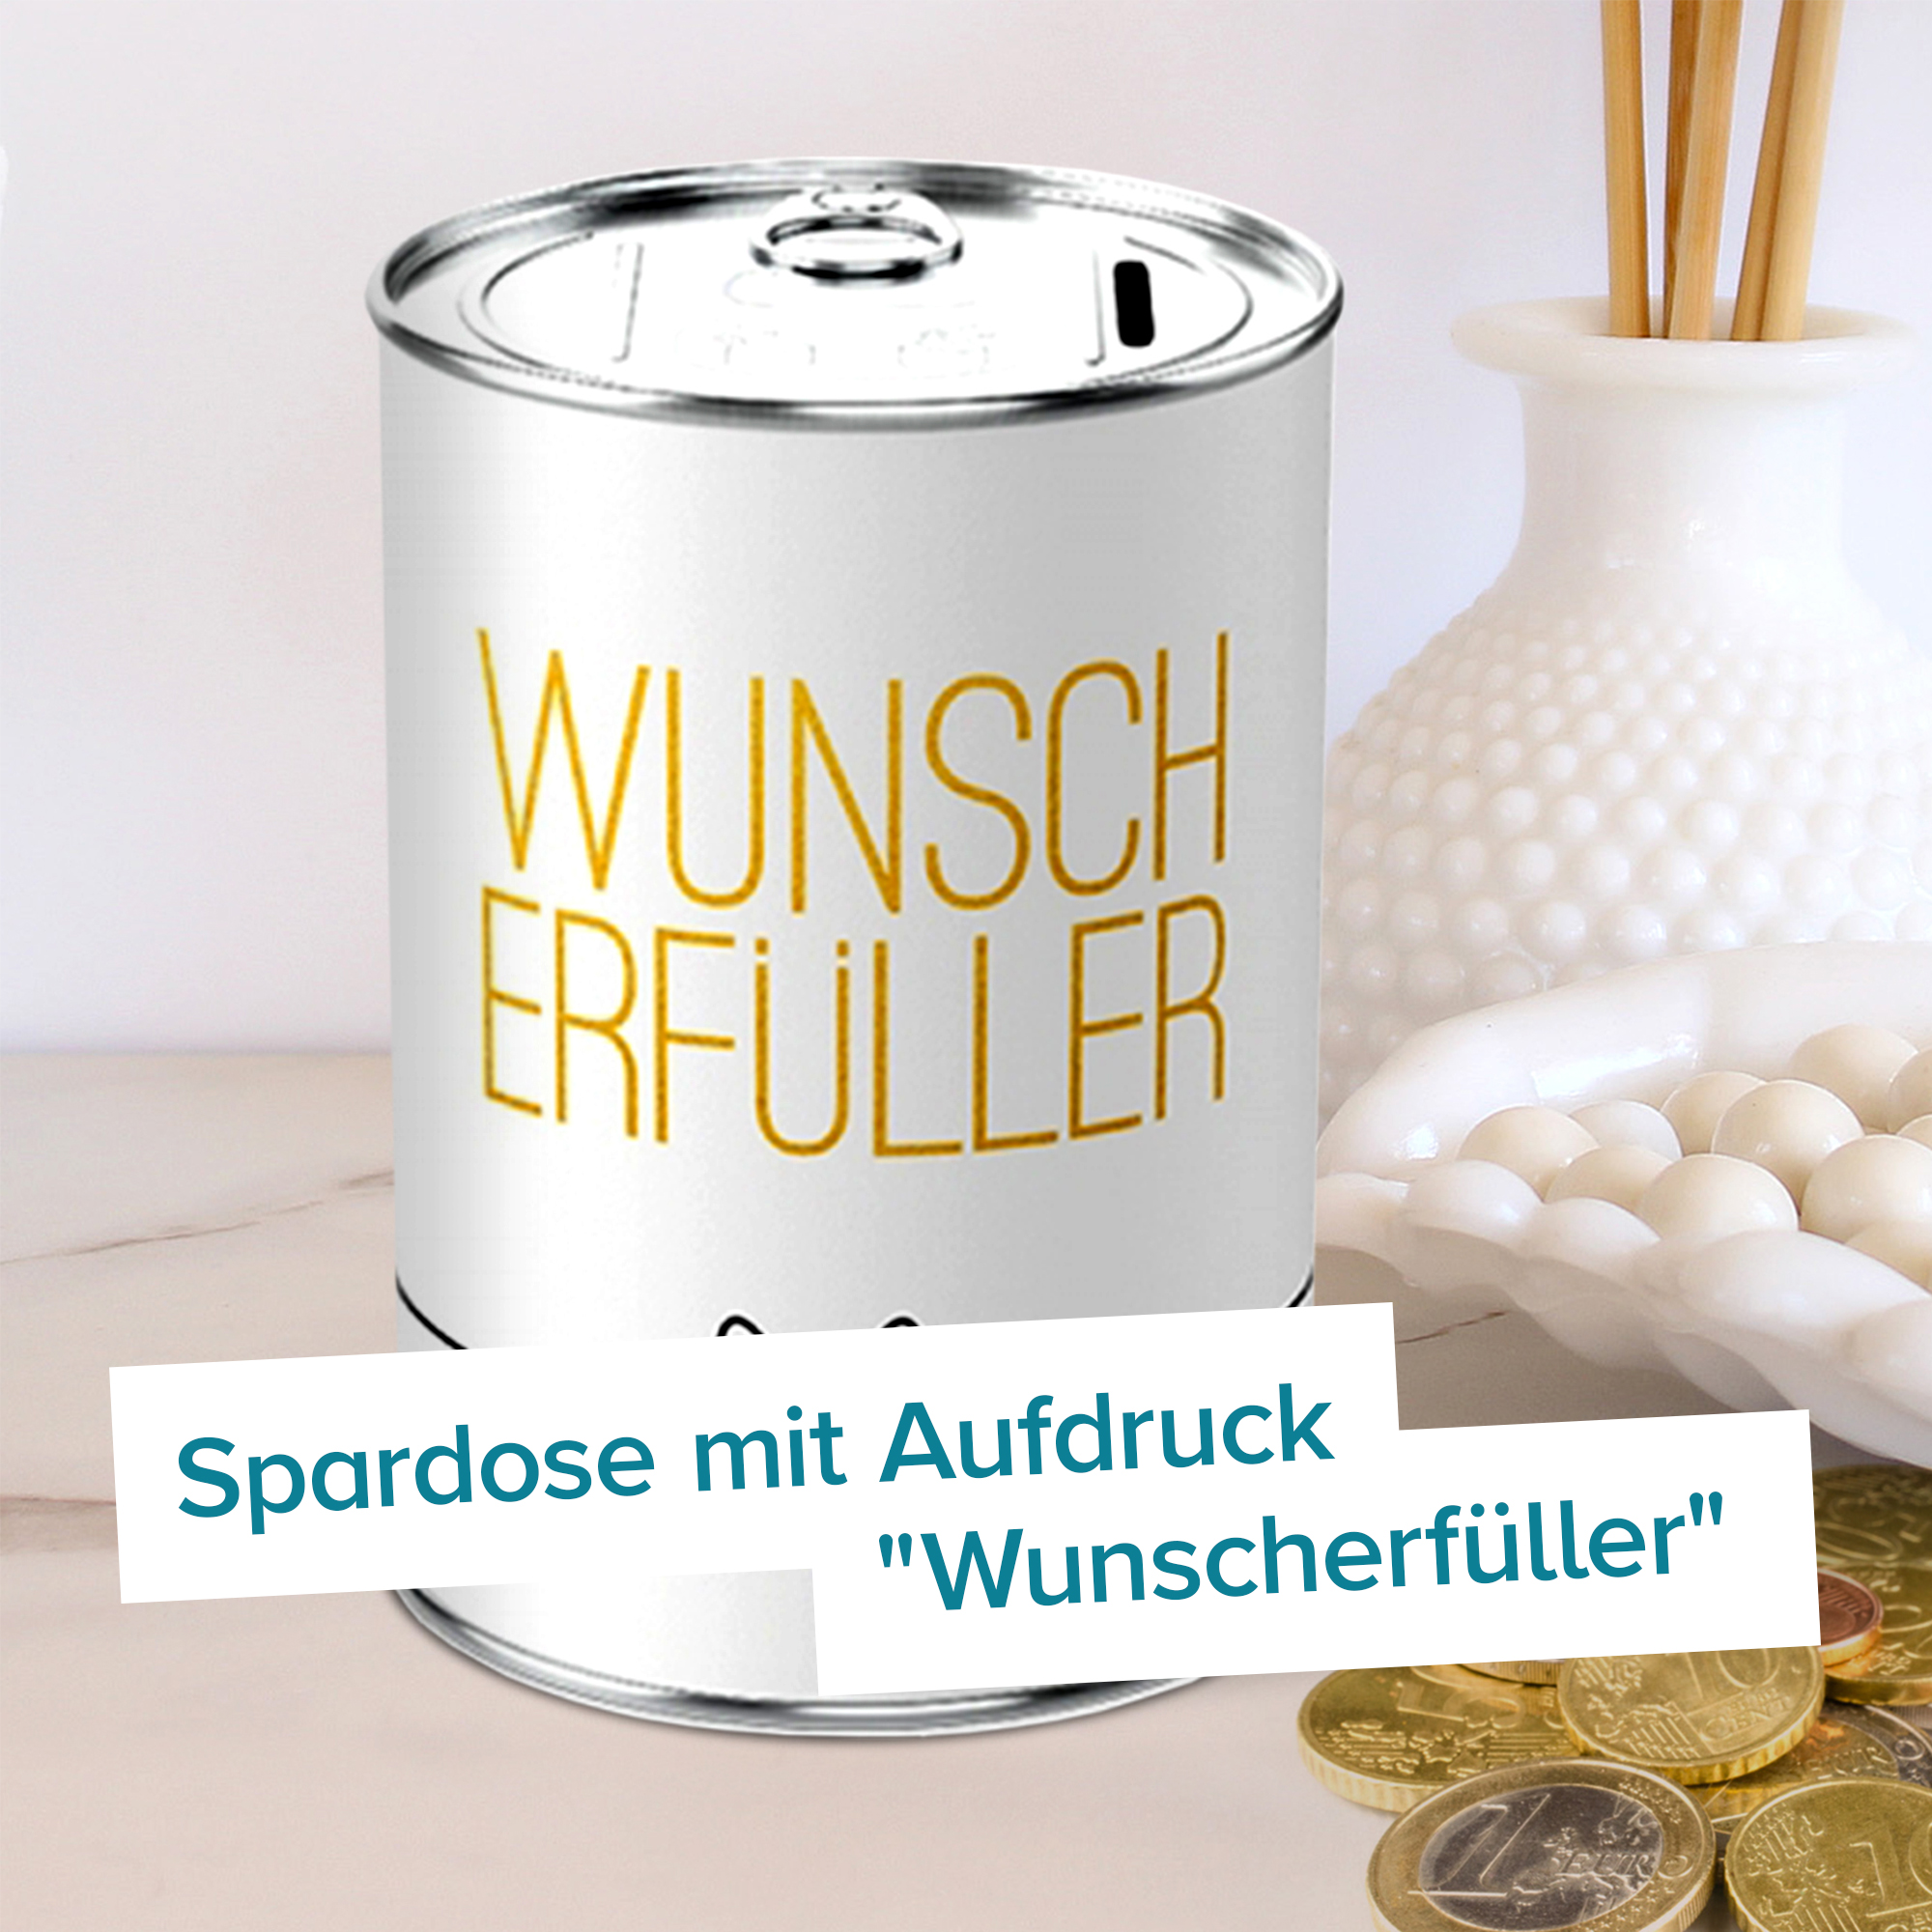 Spardose - Wunscherfüller 3999 - 6